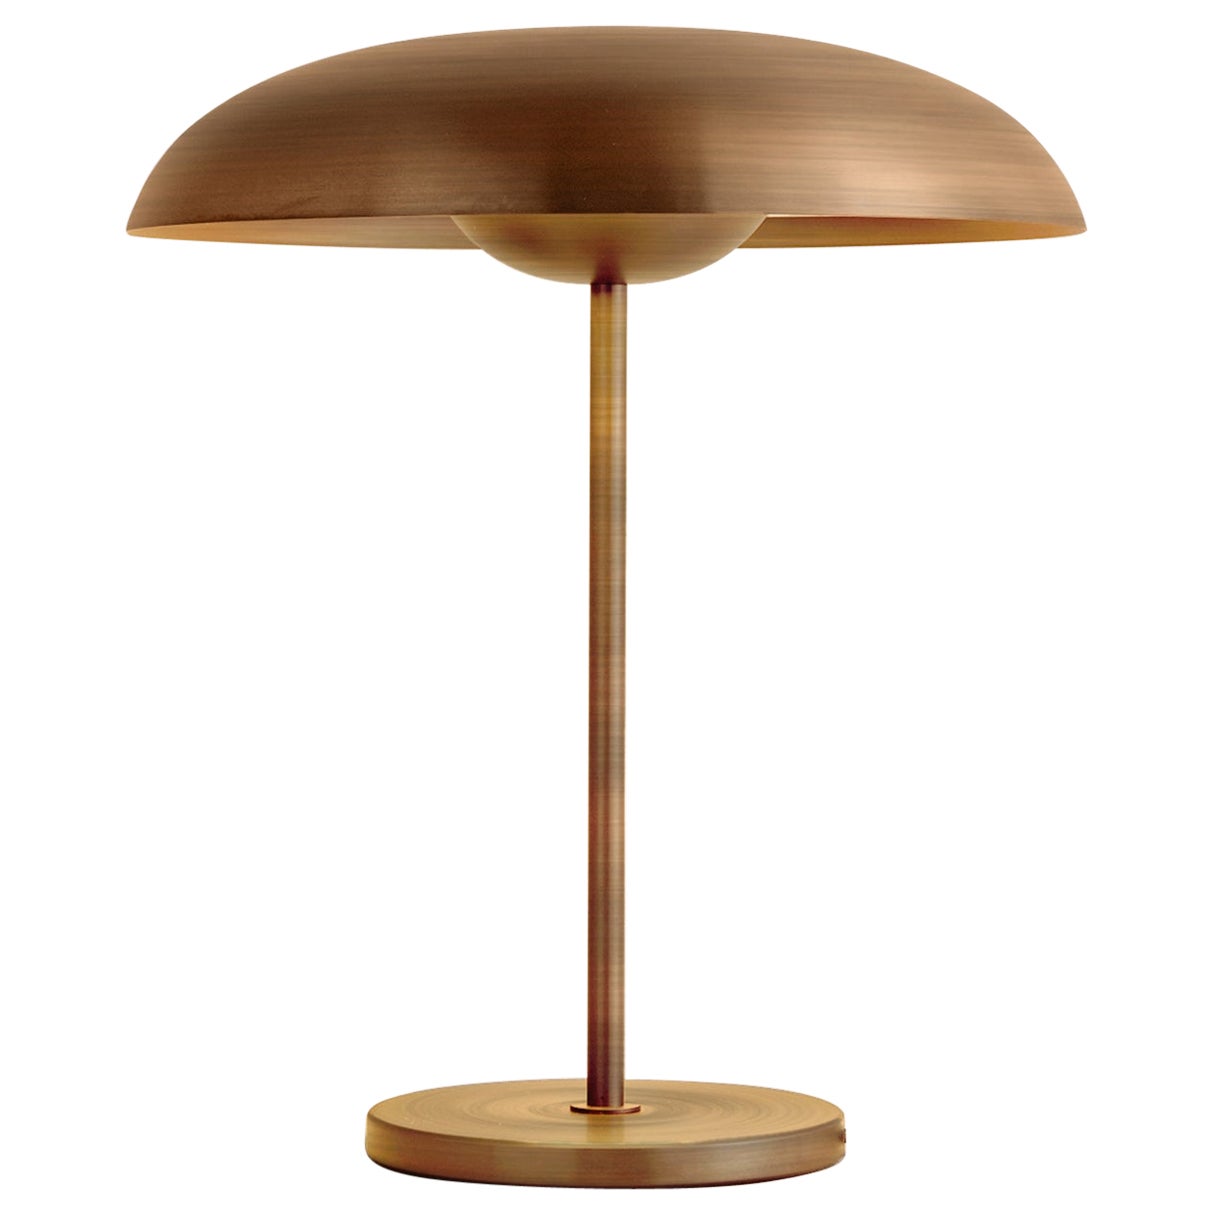 'Cosmic Solstice Antique' Table Lamp, Handmade Brushed Medium Bronze Table Light